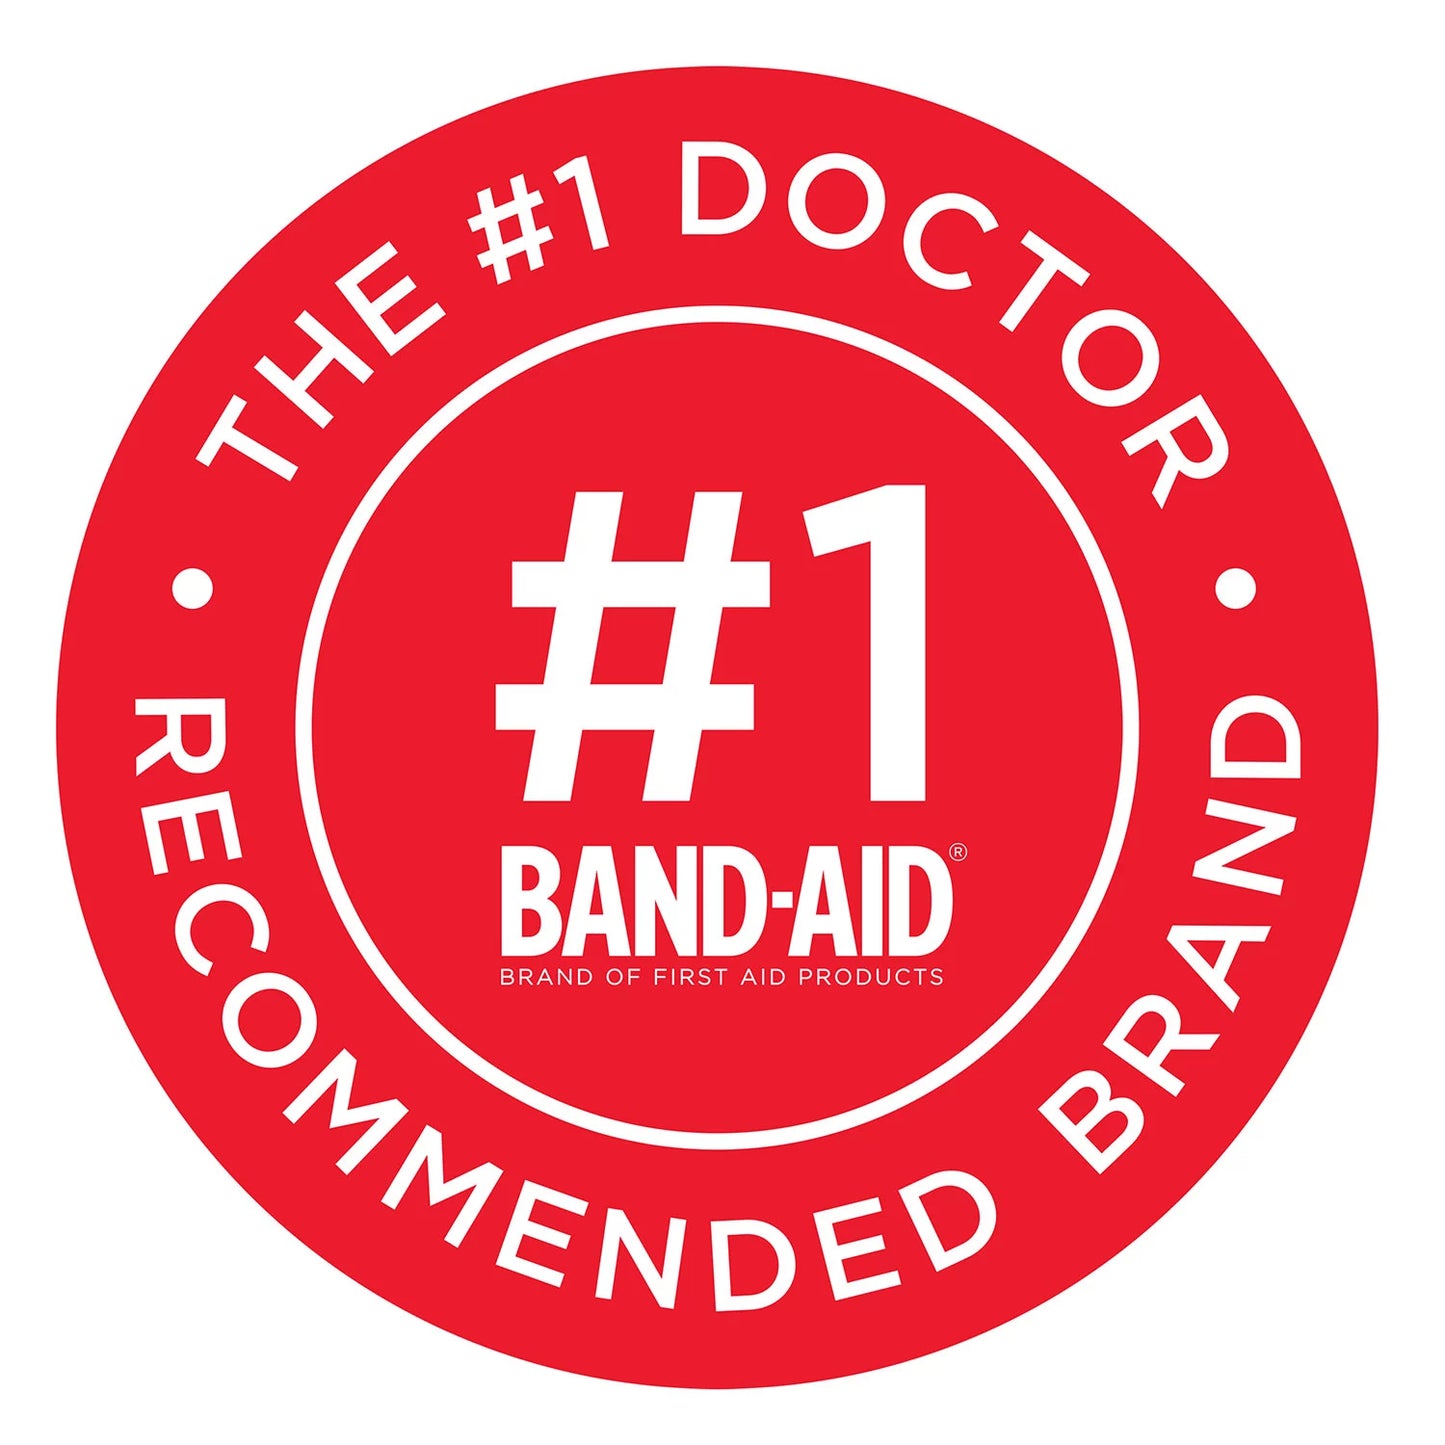 Band-Aid Brand Adhesive Bandages Variety Pack (163 ct.)